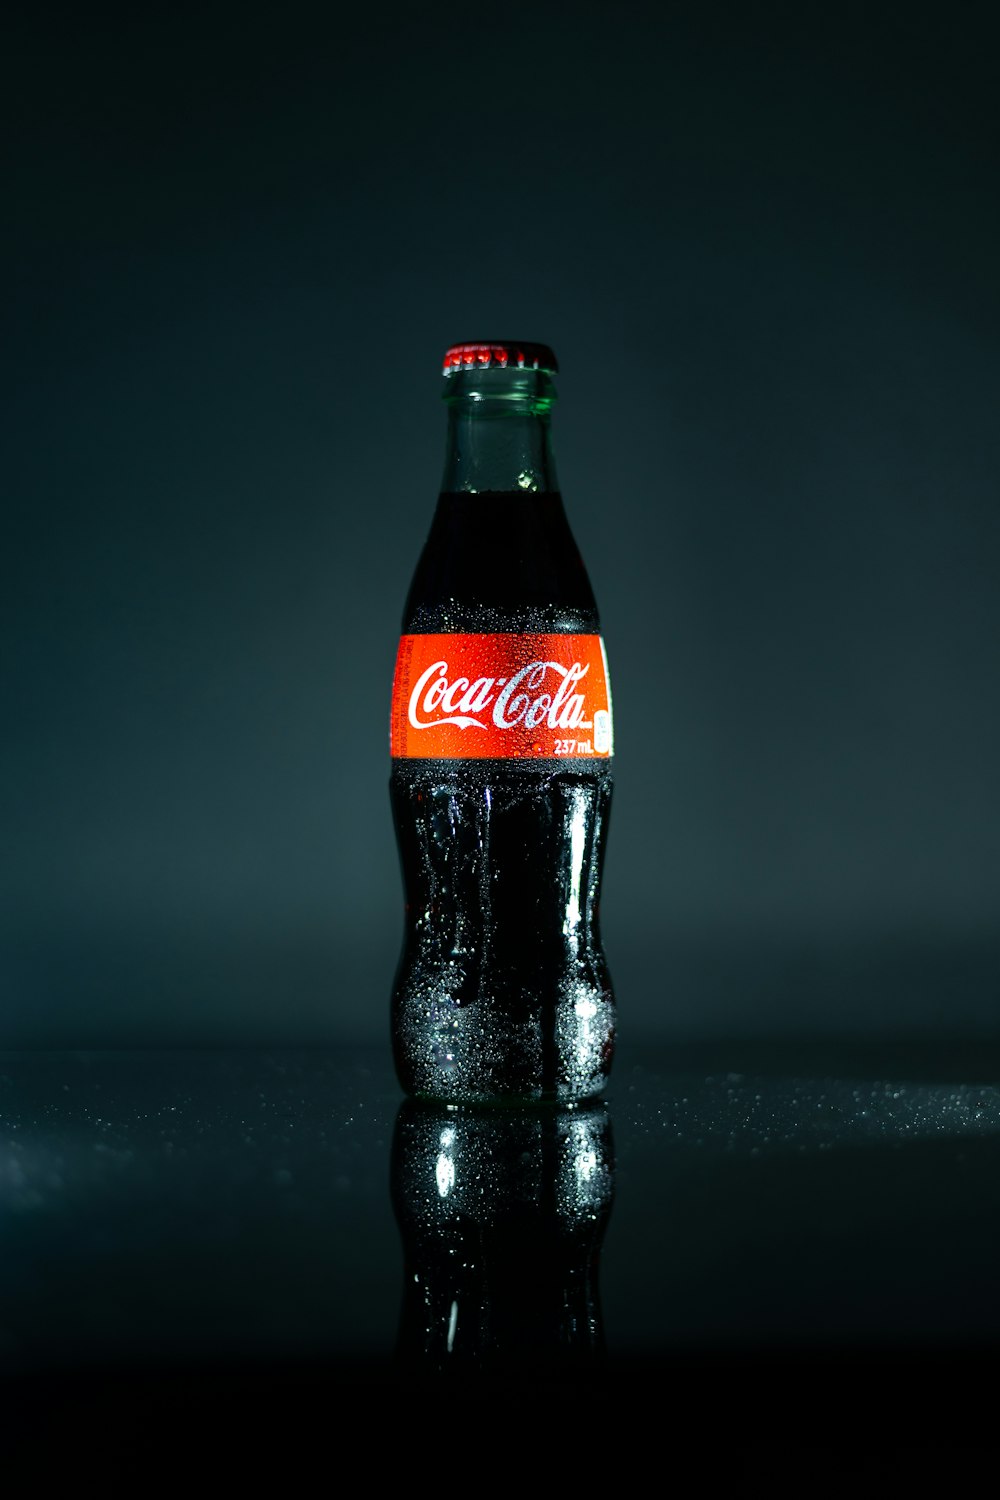 coca cola bottle on black table